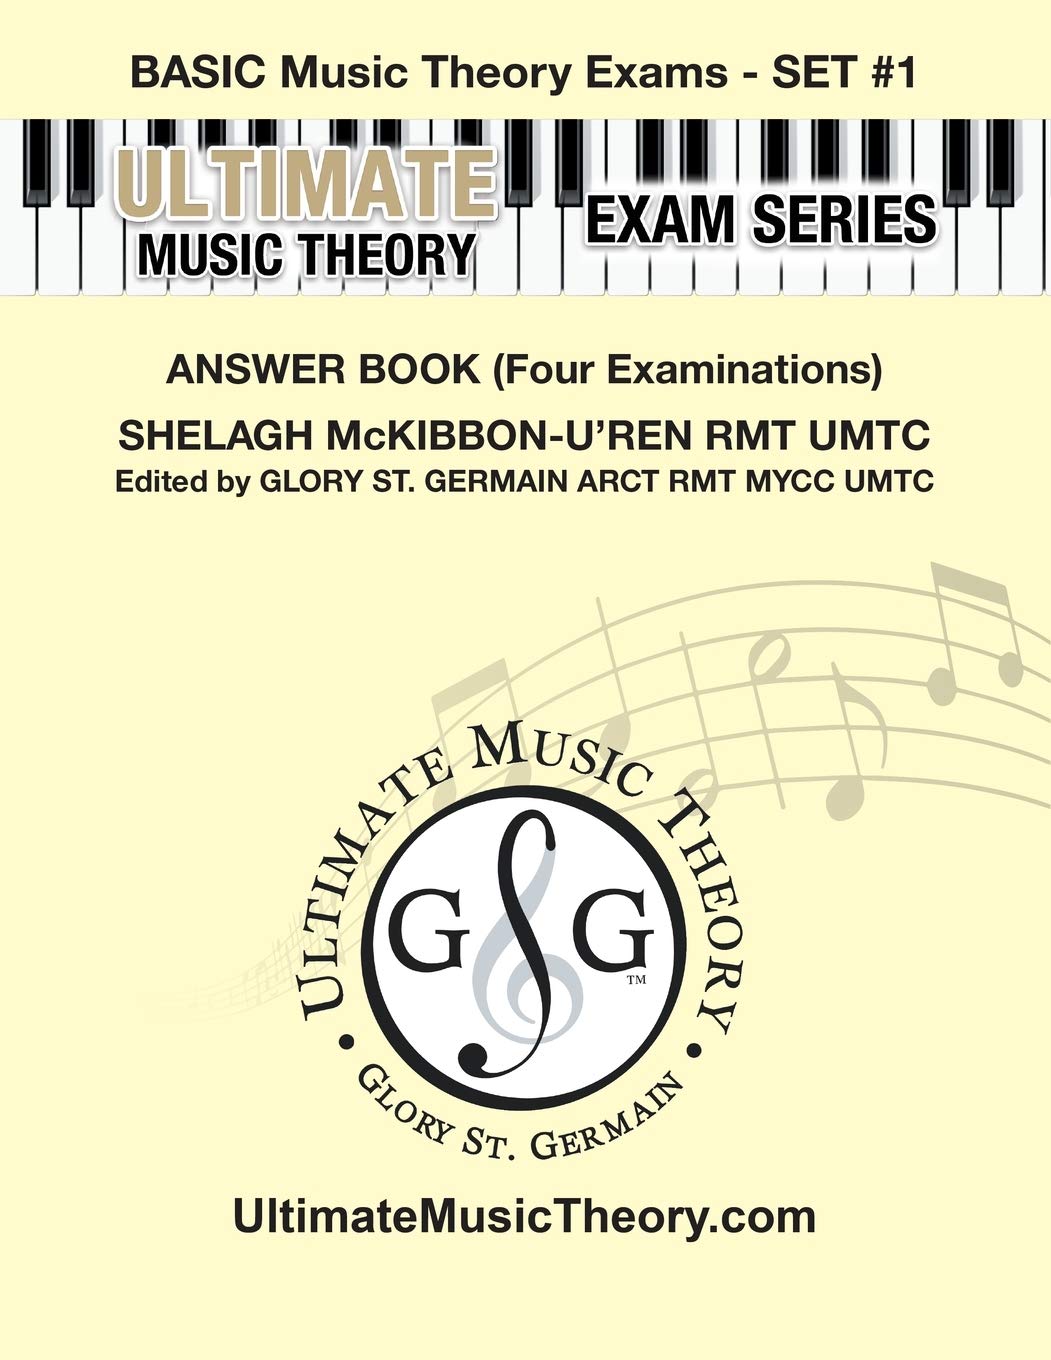 Ultimate Music Theory - Basic Exam Set #1, Answer Book